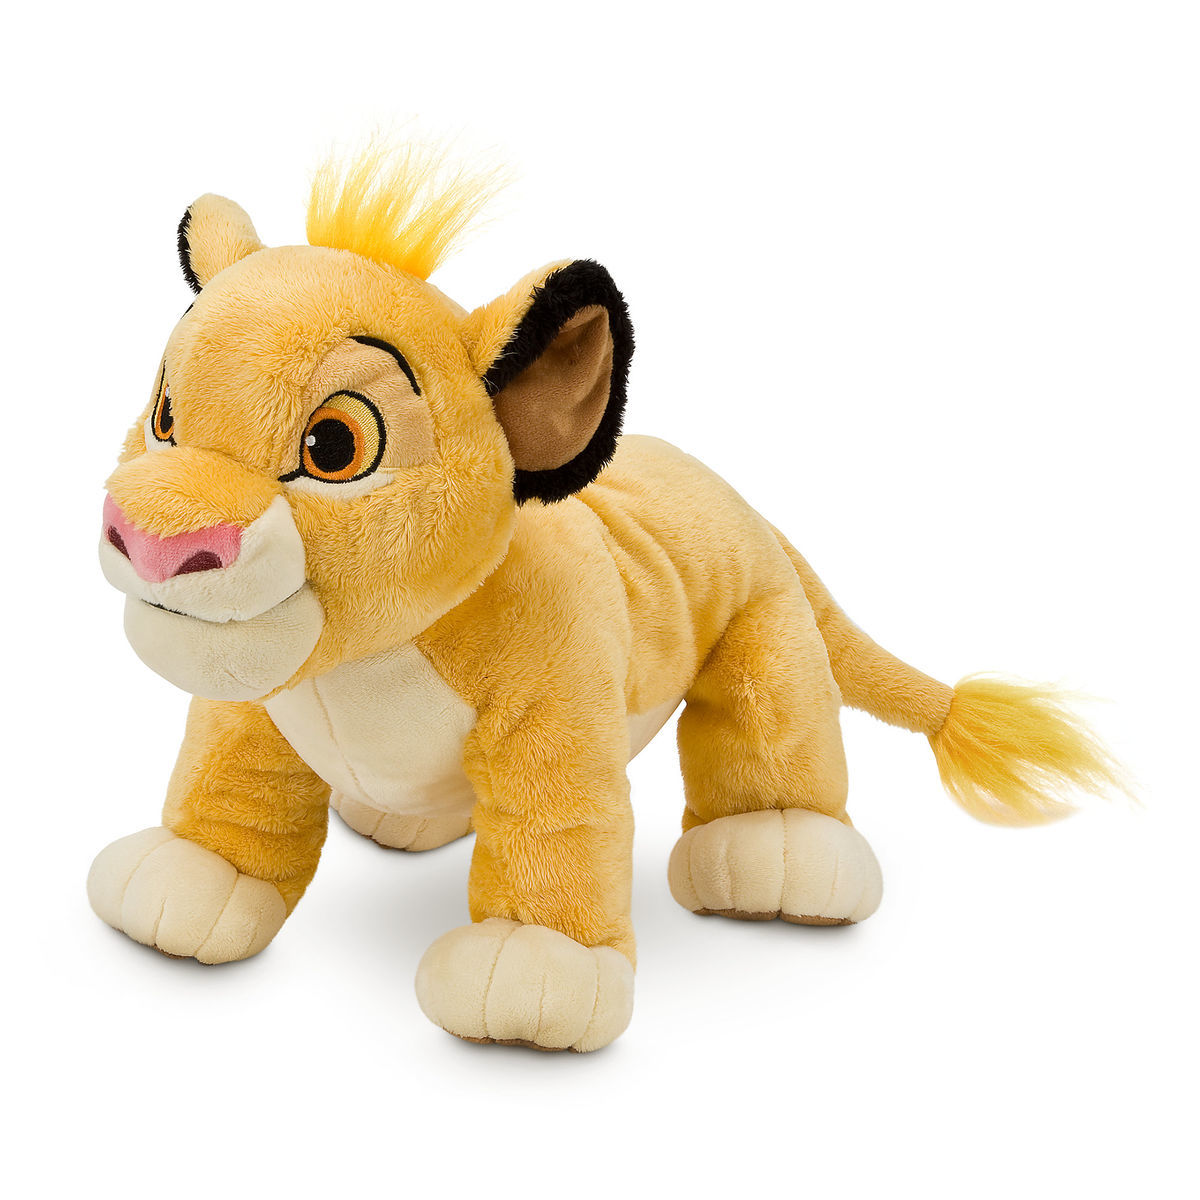 Simba Plush - The Lion King - Medium - 11''